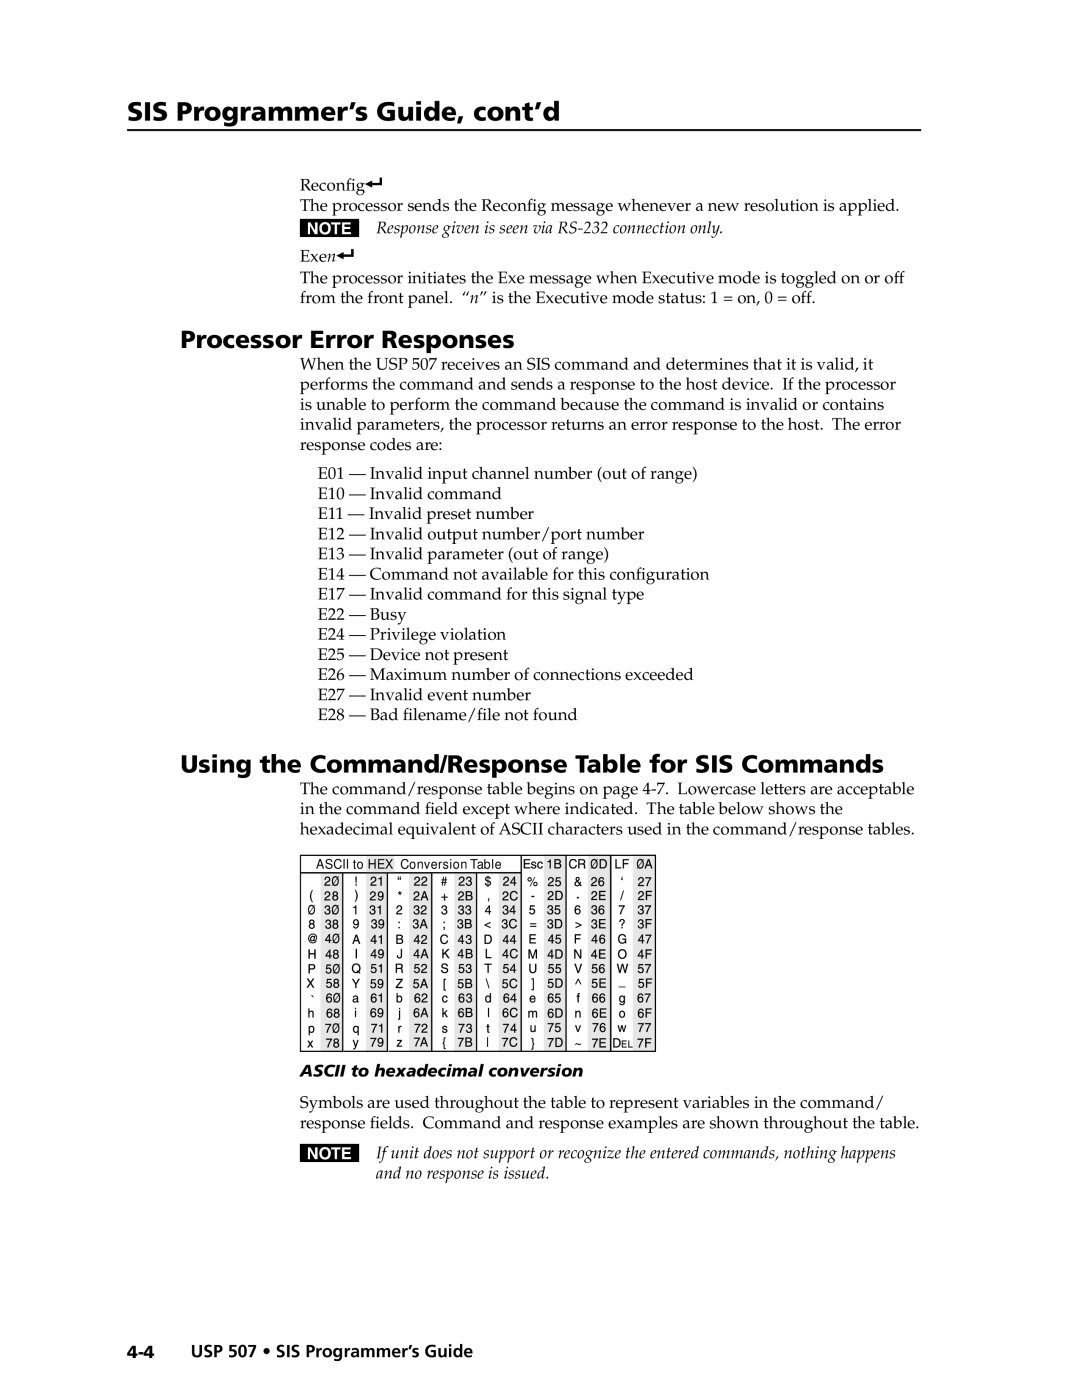 Extron electronic USP 507 manual SIS Programmer’s Guide, cont’d, Processor Error Responses, ASCII to hexadecimal conversion 